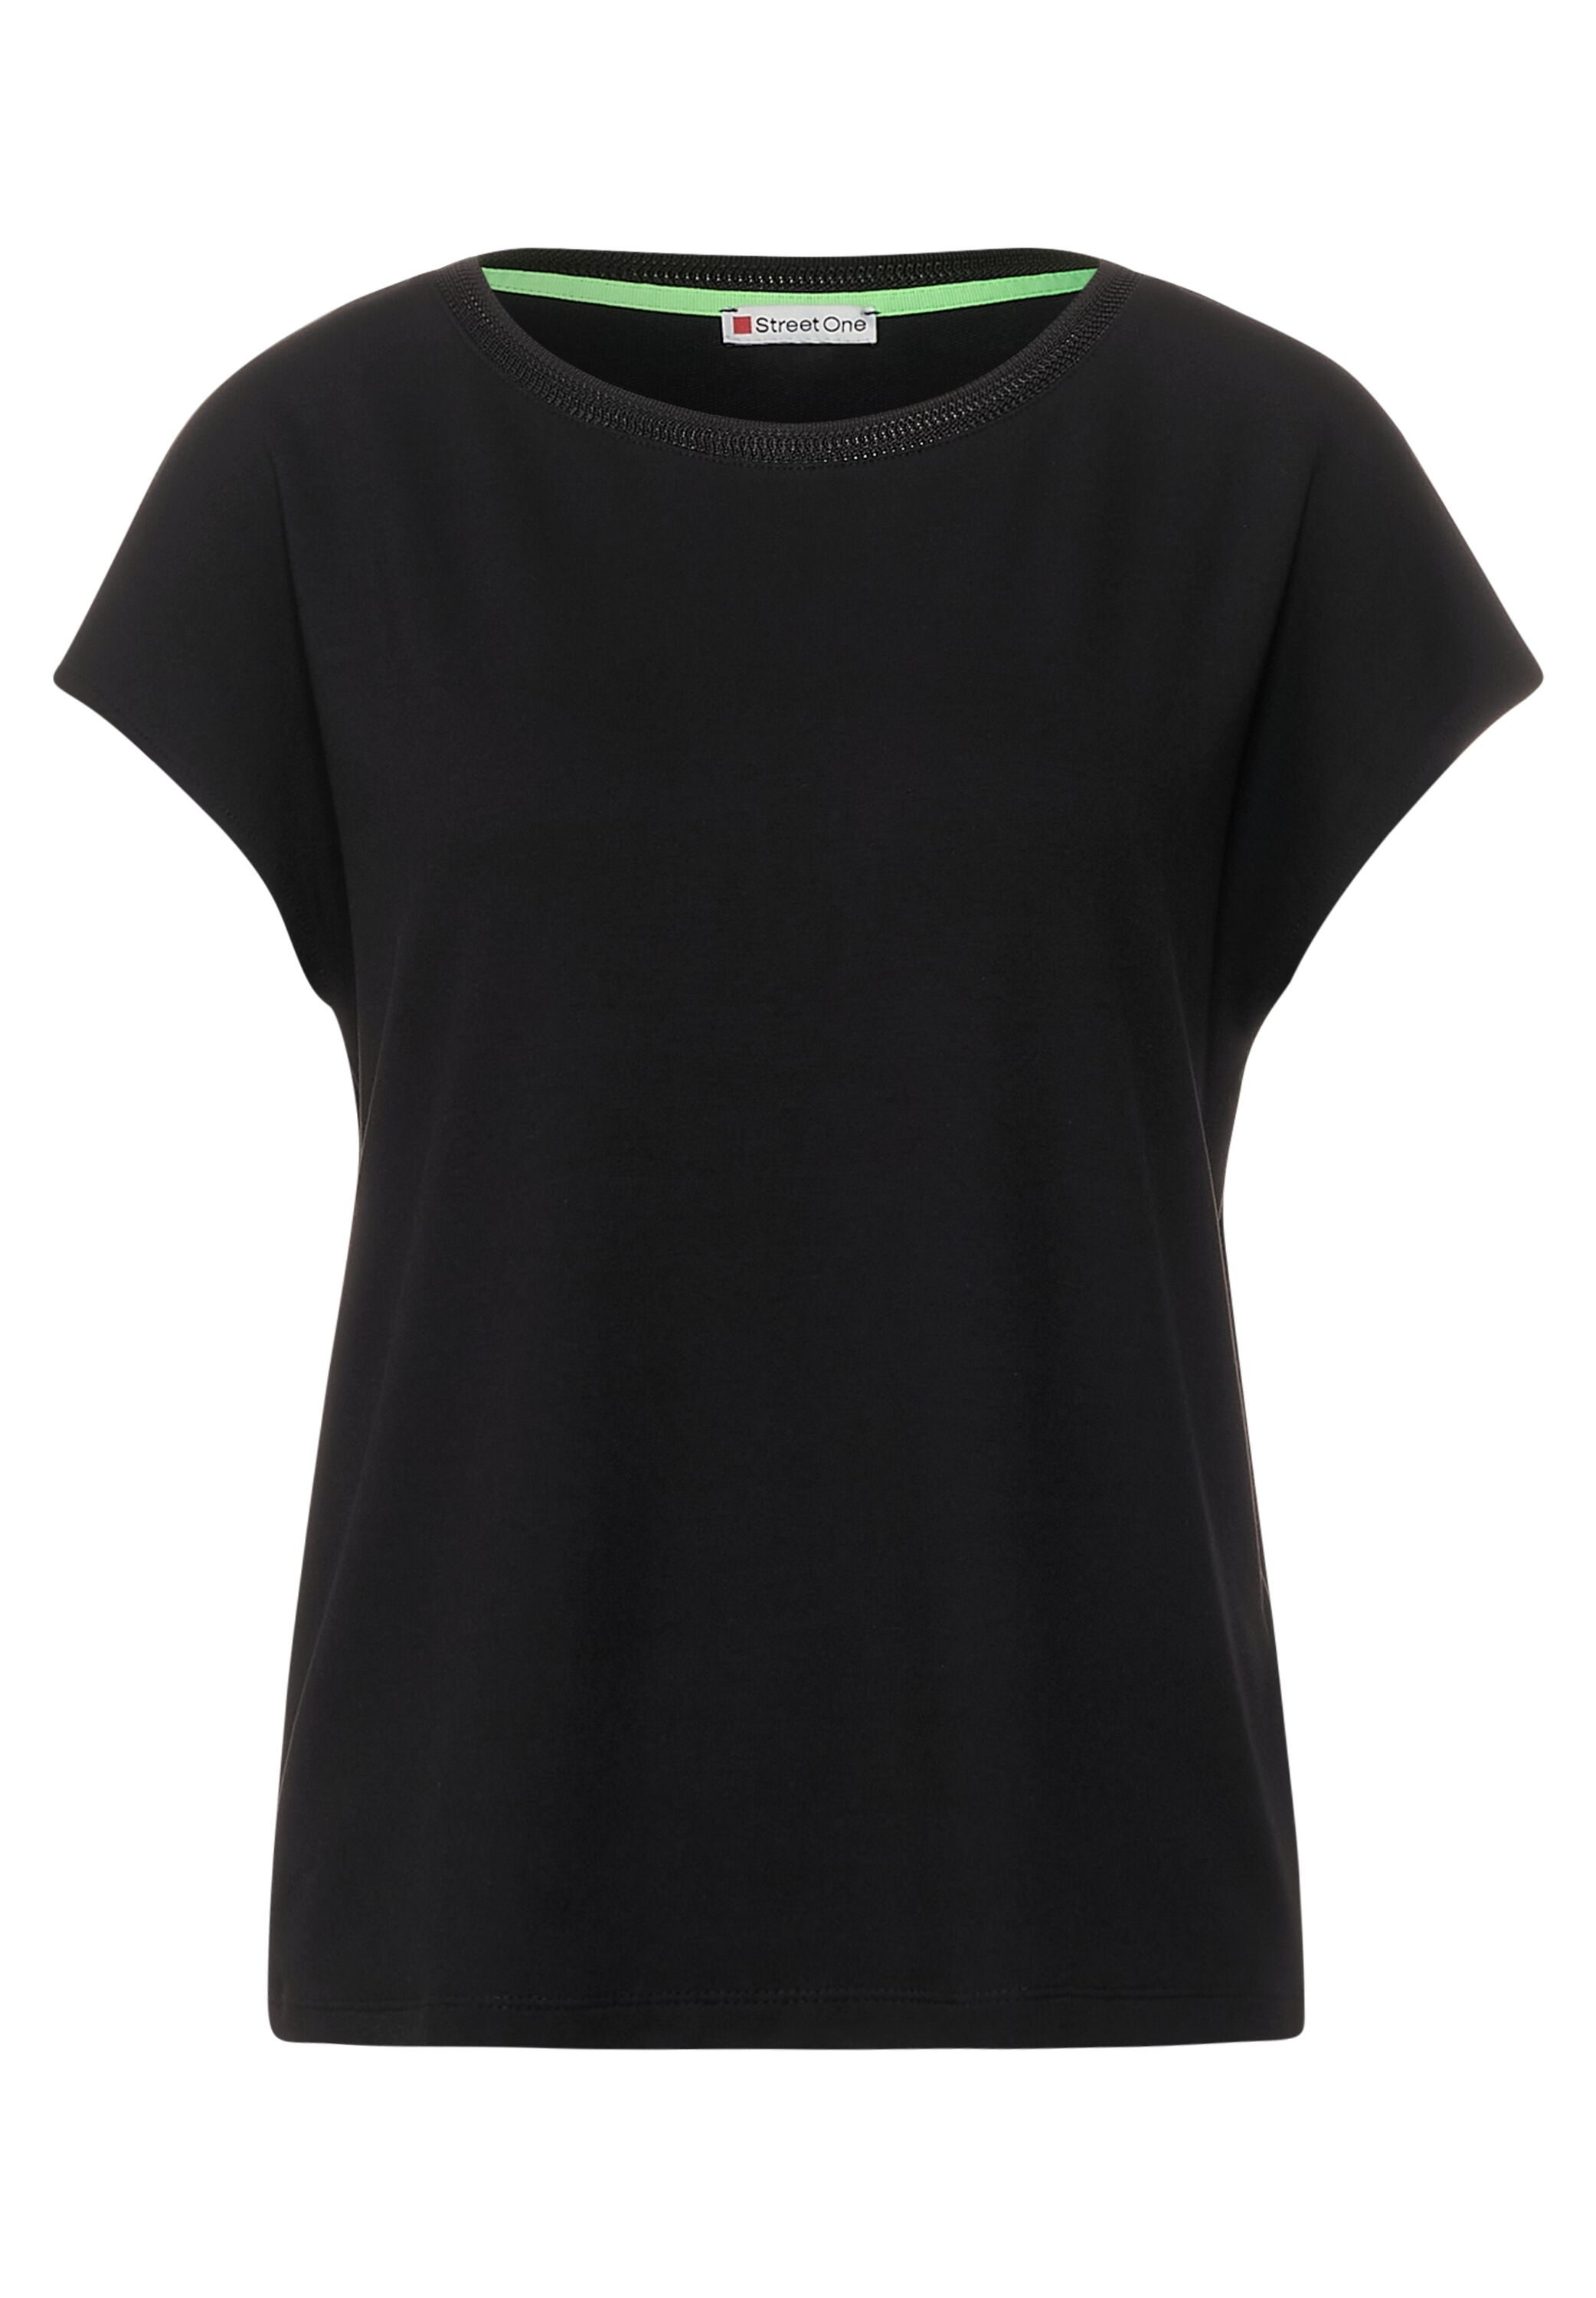 Street One T-Shirt in Black im SALE reduziert A318332-10001 - CONCEPT Mode